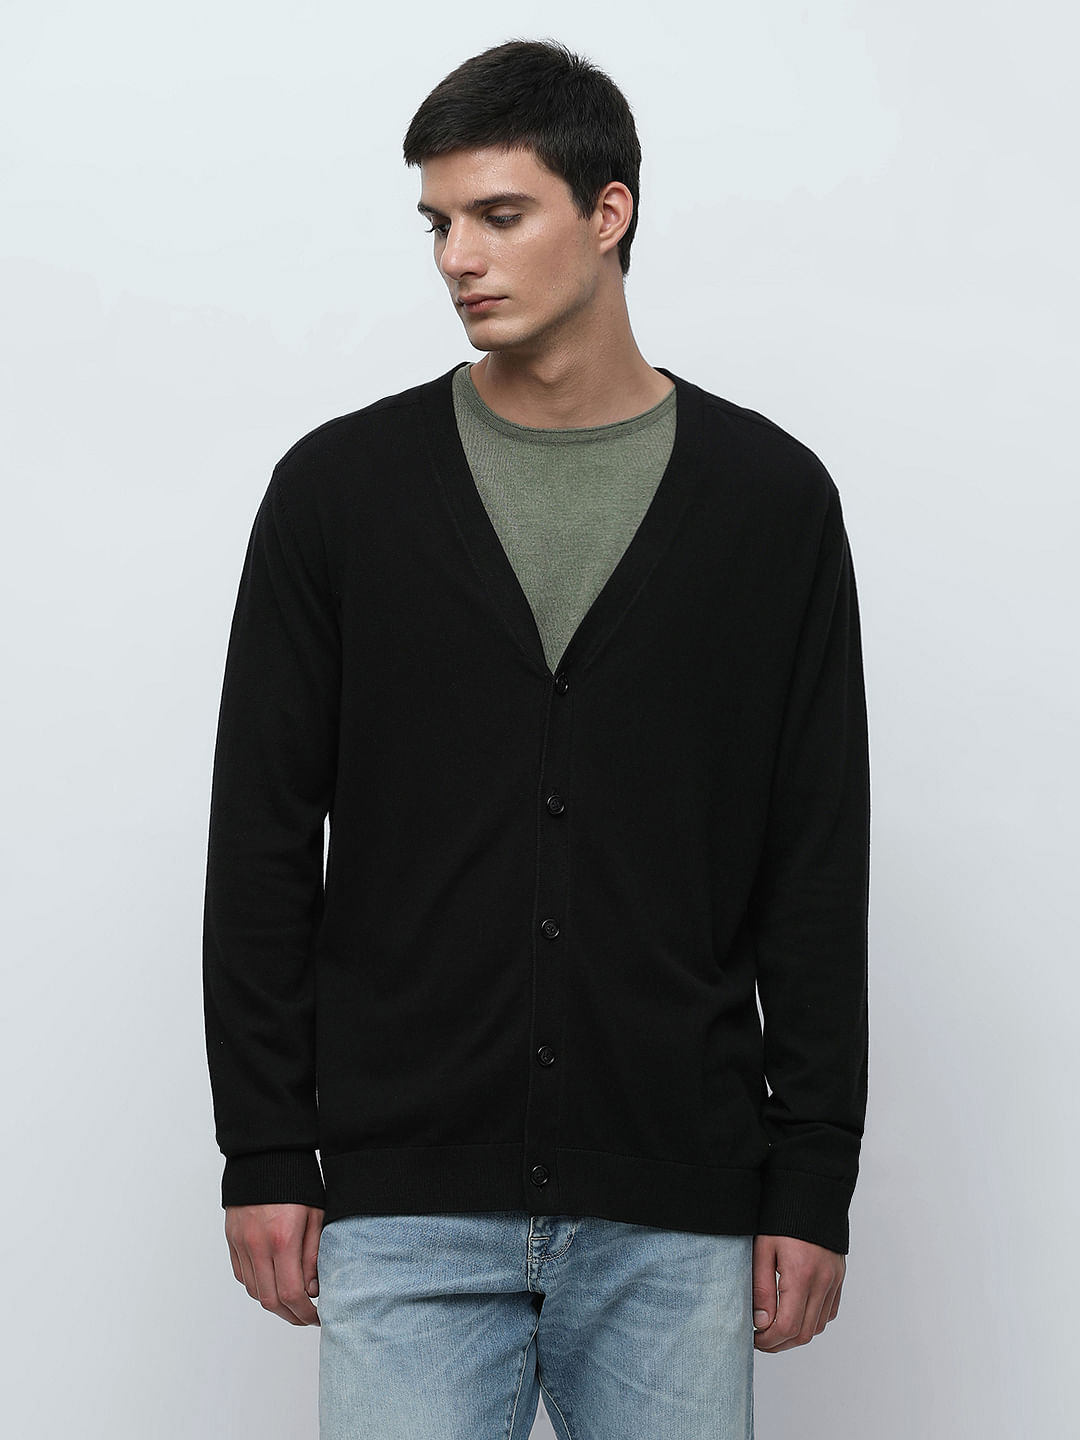 Buy Cardigan for Men, Men Cardigan Sweater: SELECTED HOMME